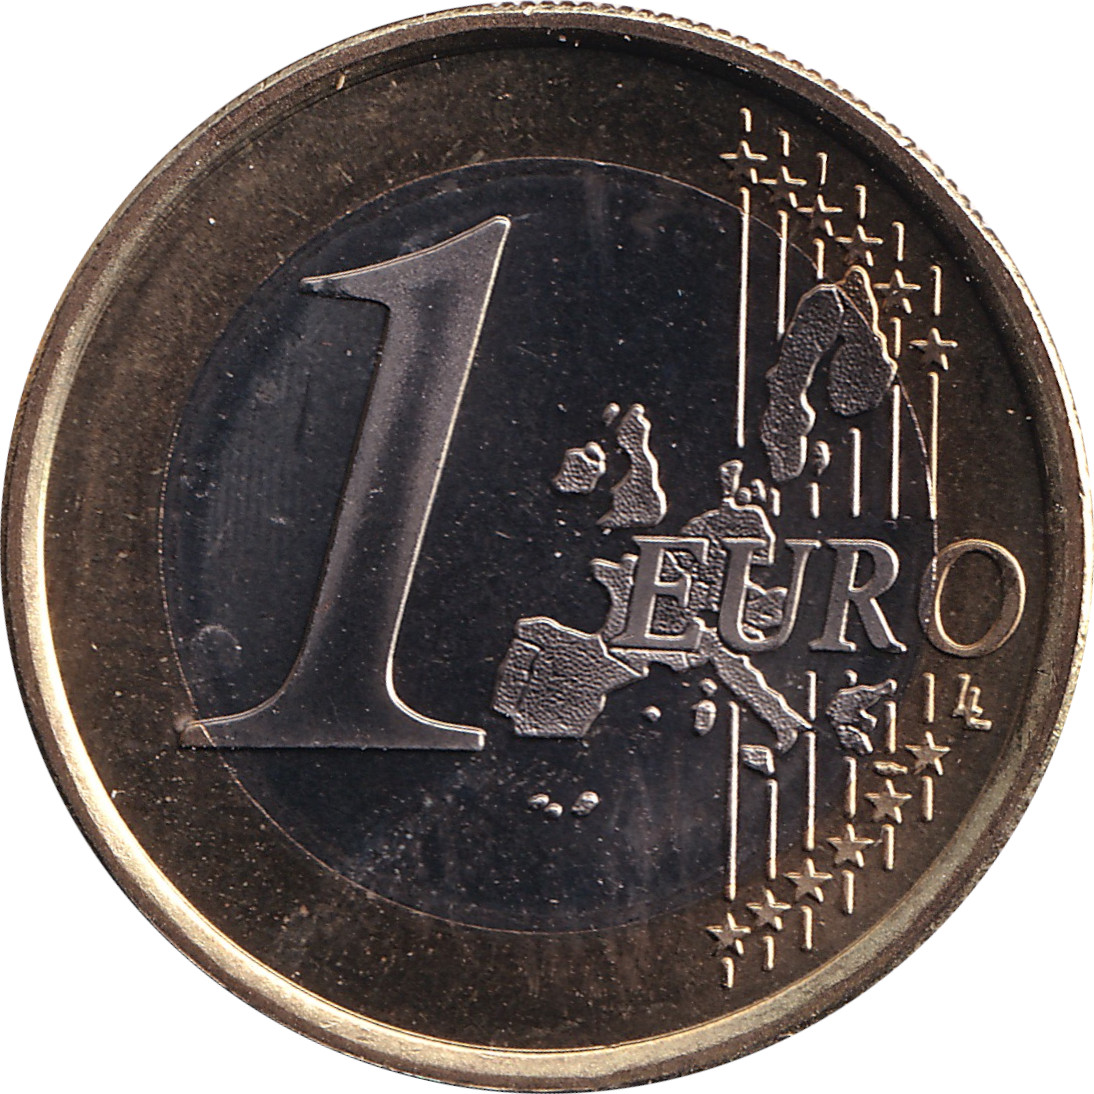 1 euro - Lire irlandaise